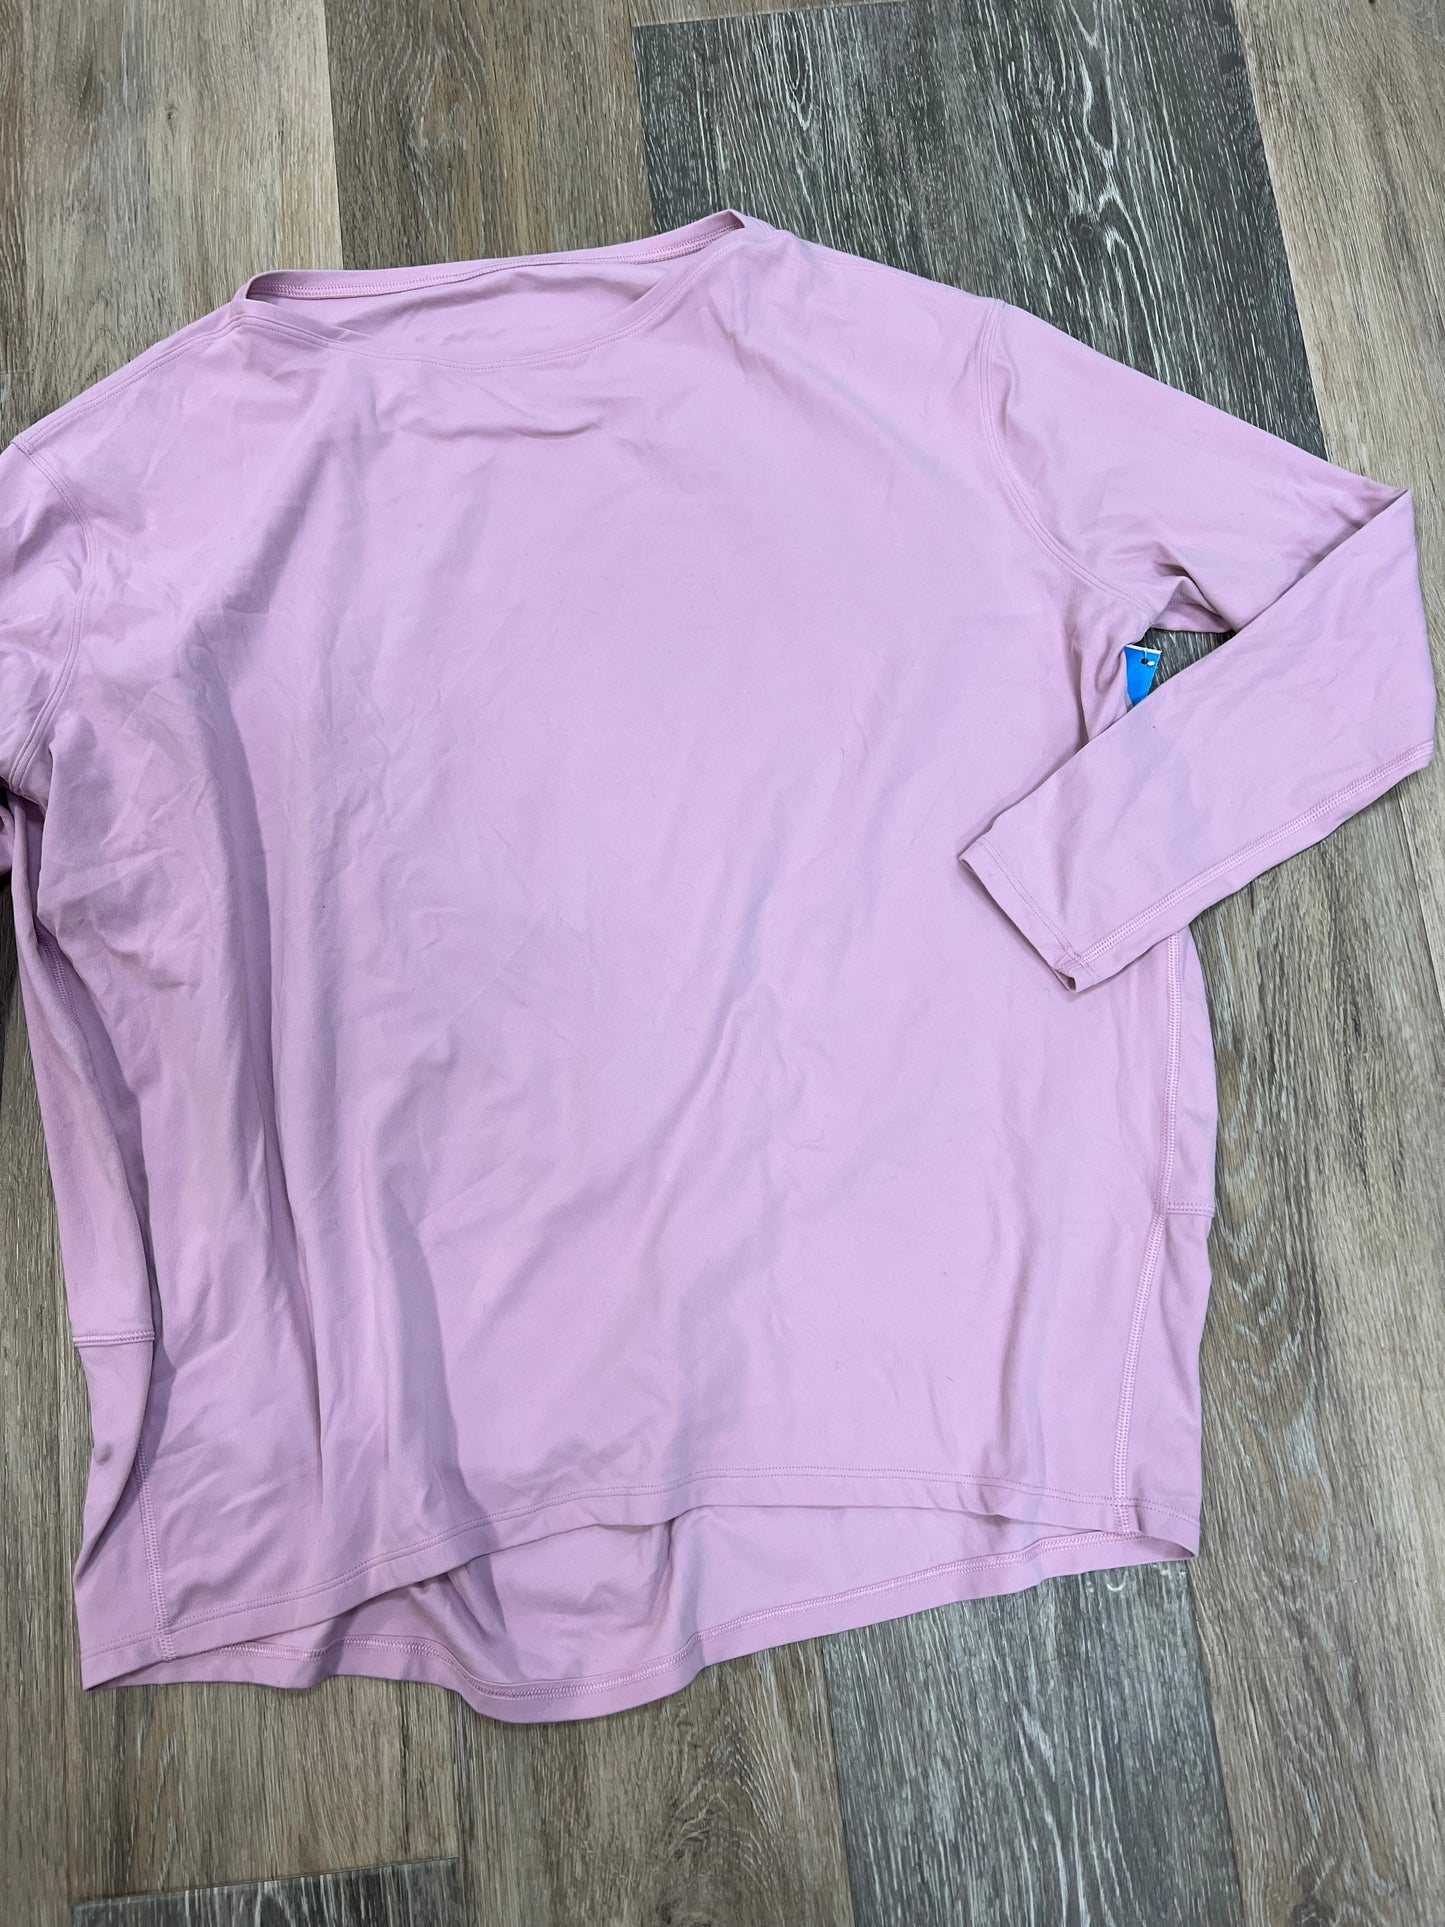 Pink Athletic Top Long Sleeve Crewneck Lululemon, Size 6